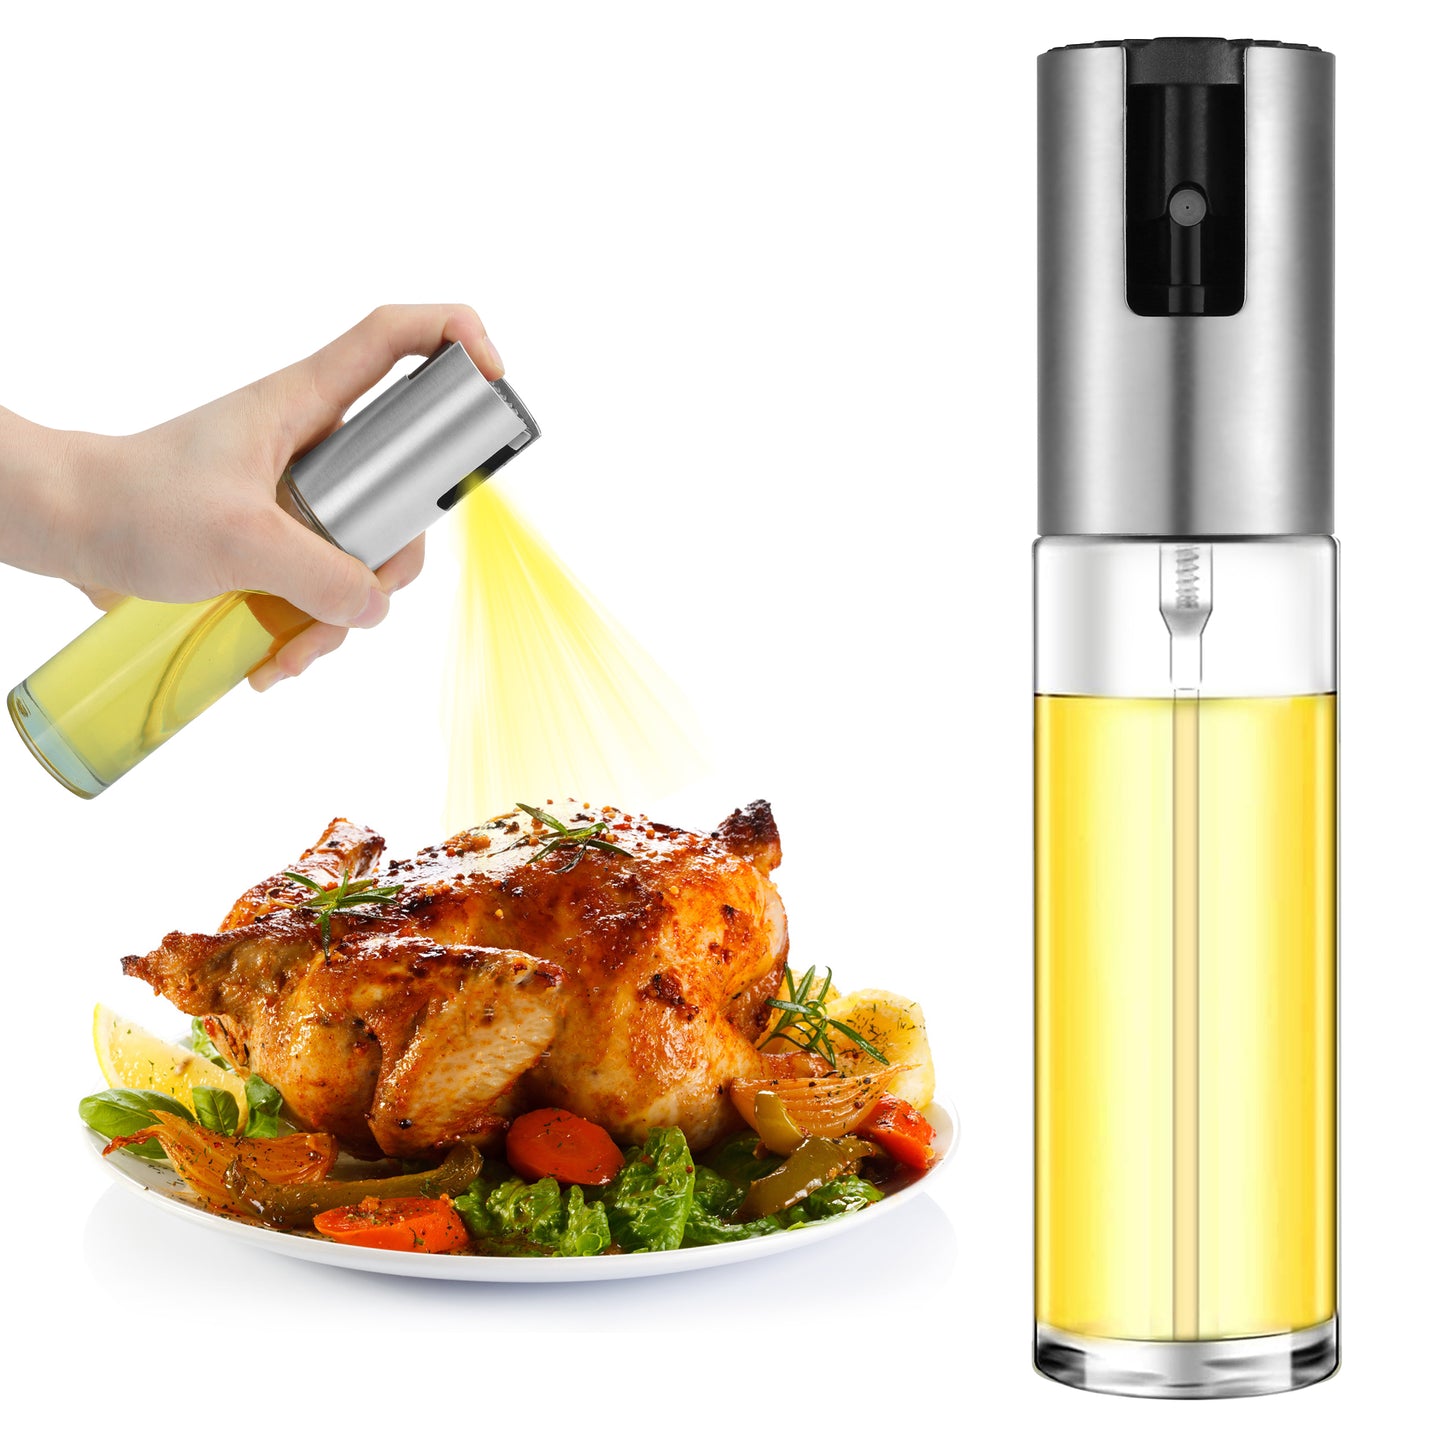 Oil Sprayer for Cooking, Olive Oil Sprayer Mister for Air Fryer, 3.7oz(100ml) Olive Oil Spray Bottle, Vinegar Oil Portable Kitchen Gadgets for Baking, Salad, Grilling, BBQ, Roasting (Silver)